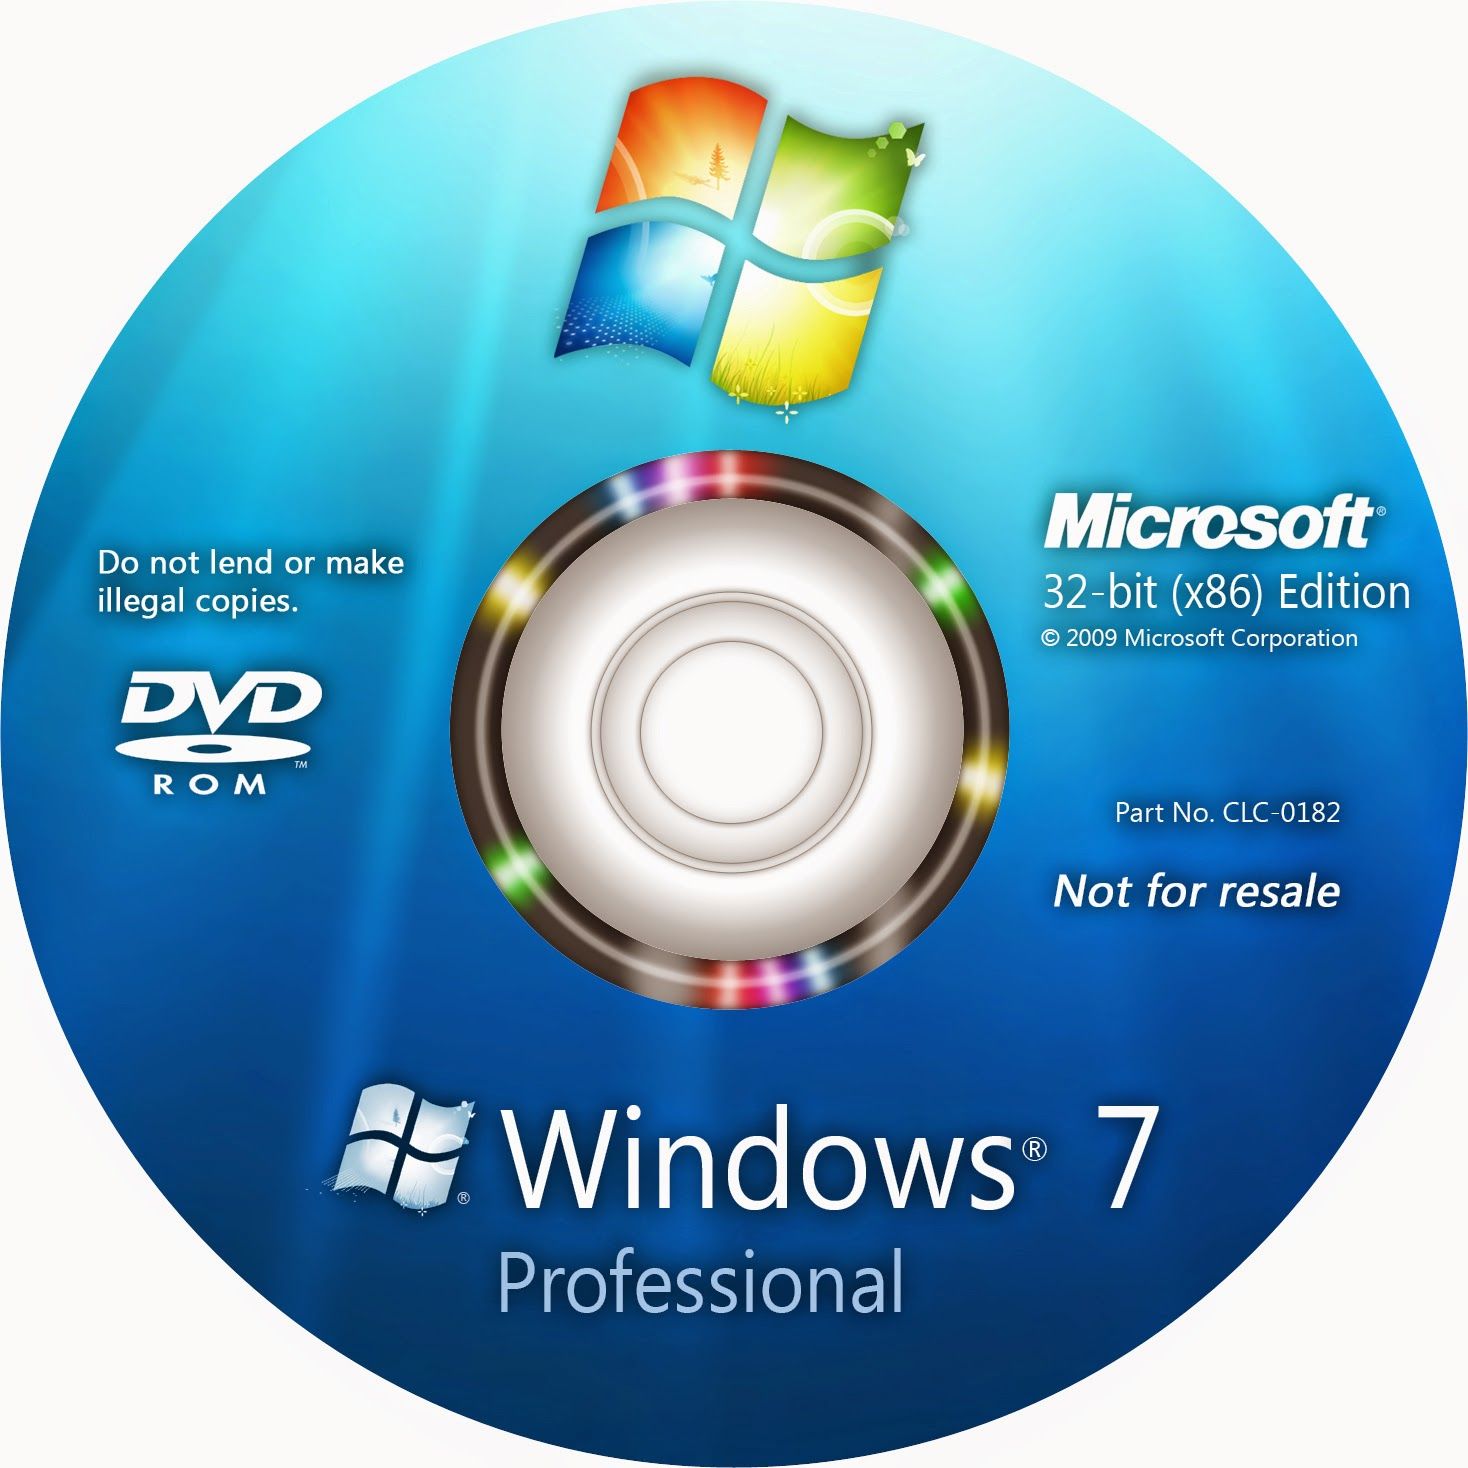 windows 7 crux 64 bit iso download